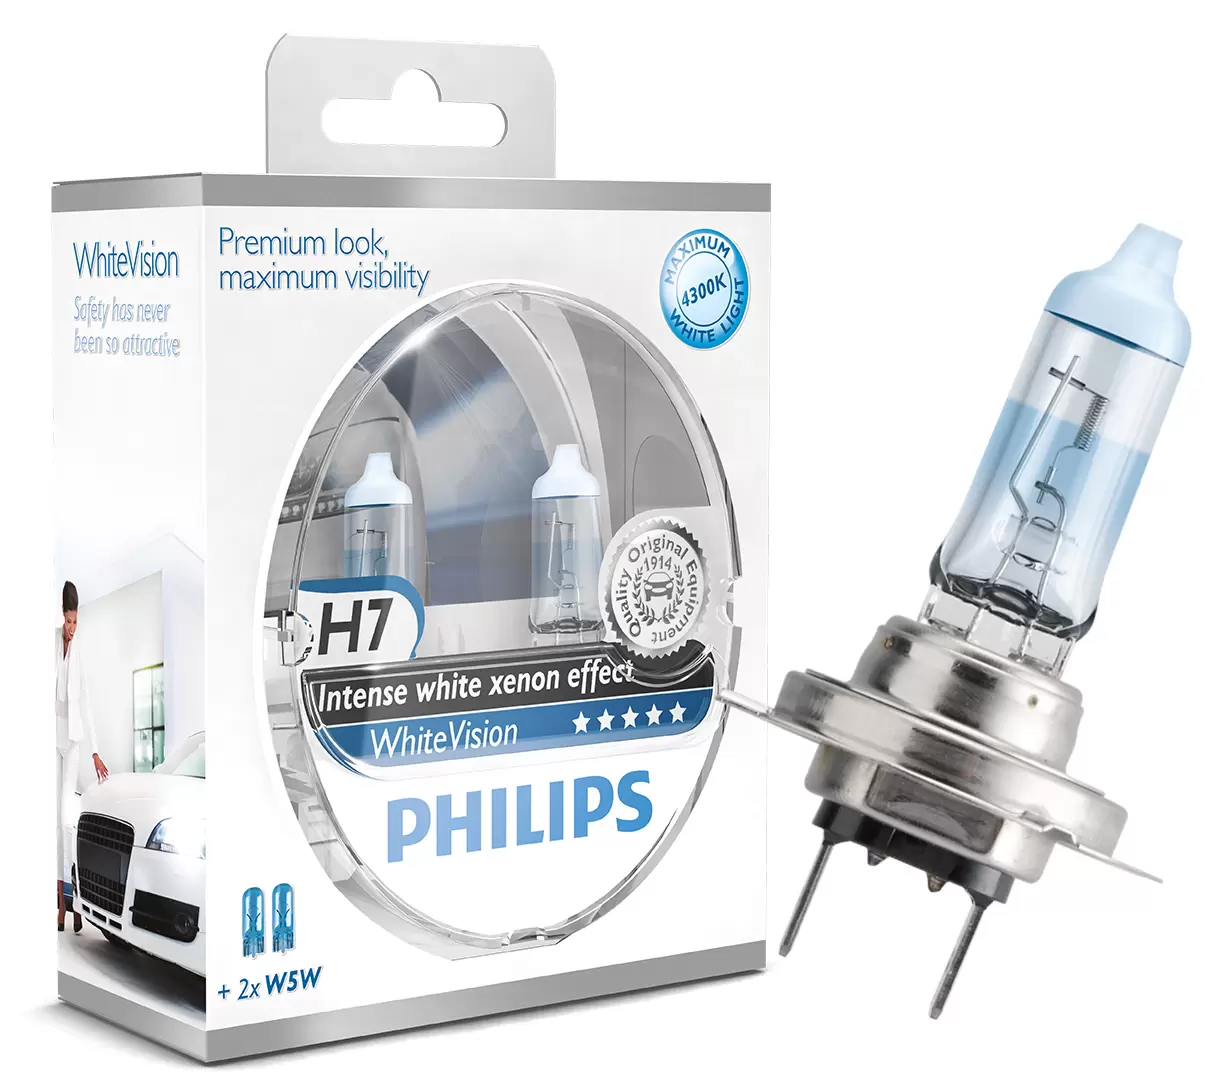 Philips WhiteVision Vs. Philips Blue Vision Ultra